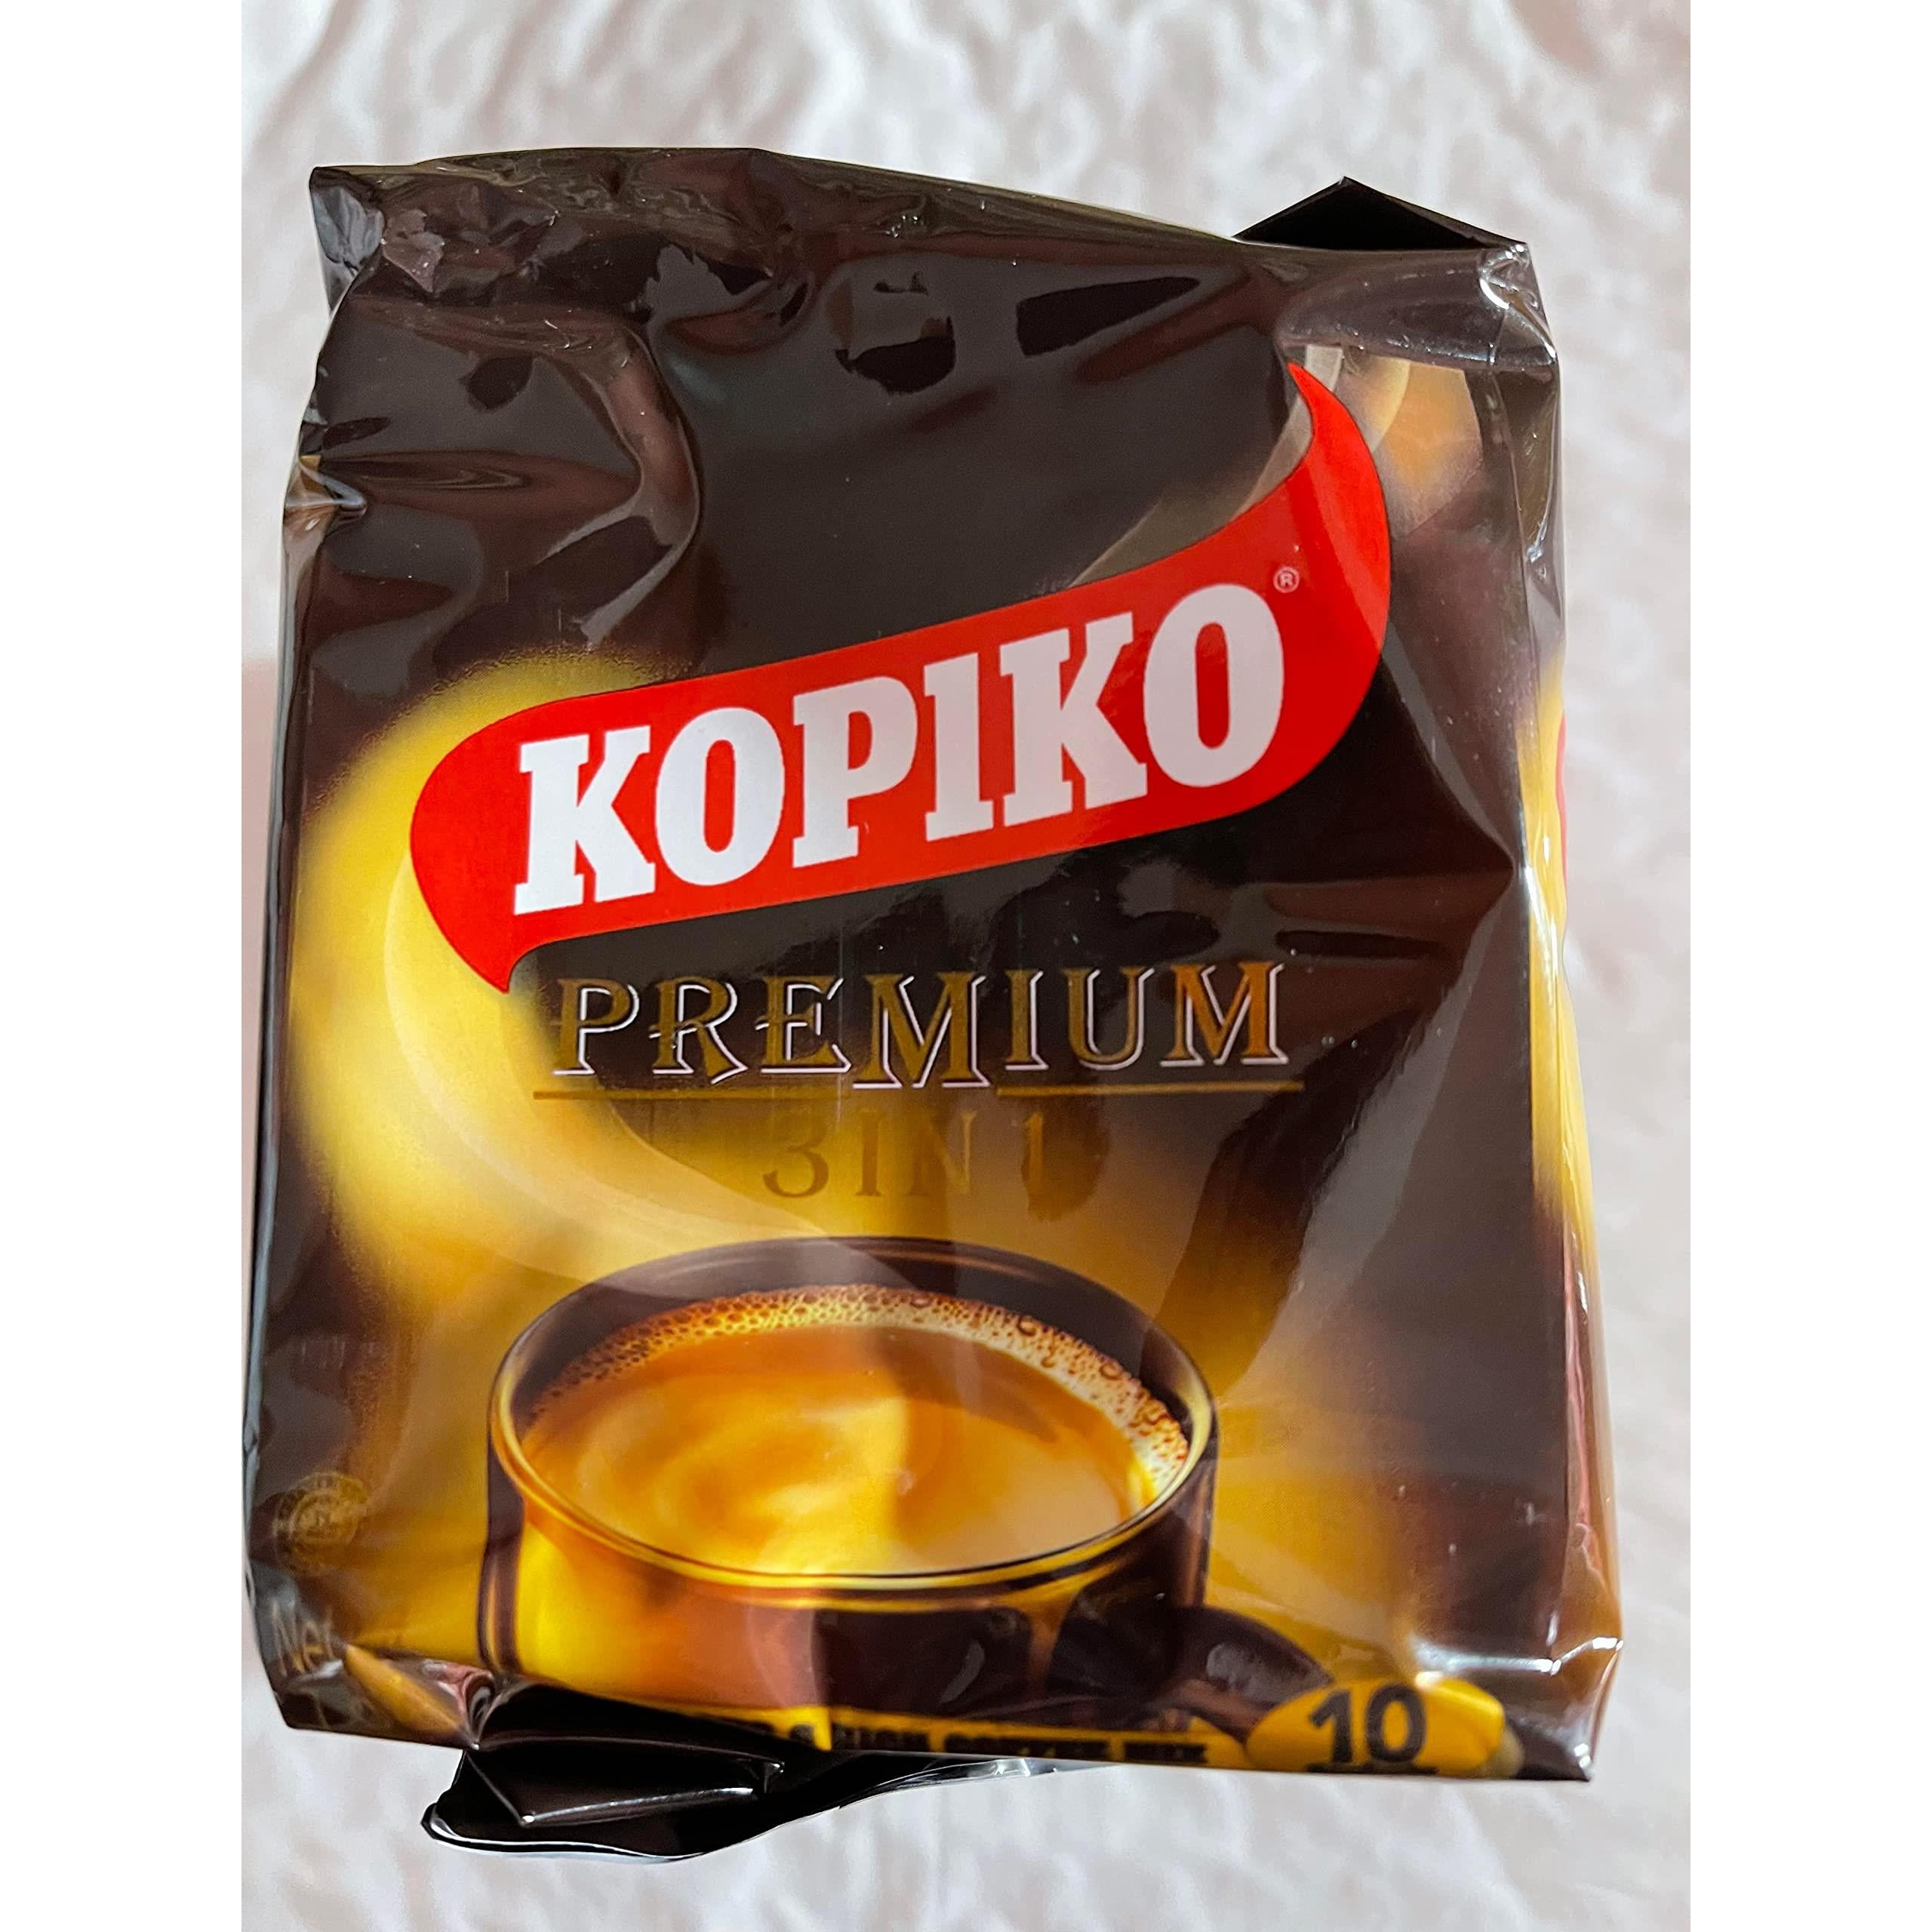 Kopiko Instant Coffee Astig 3 in 1, 7.1 oz (10 Sachets per pack) (Pack of 1)